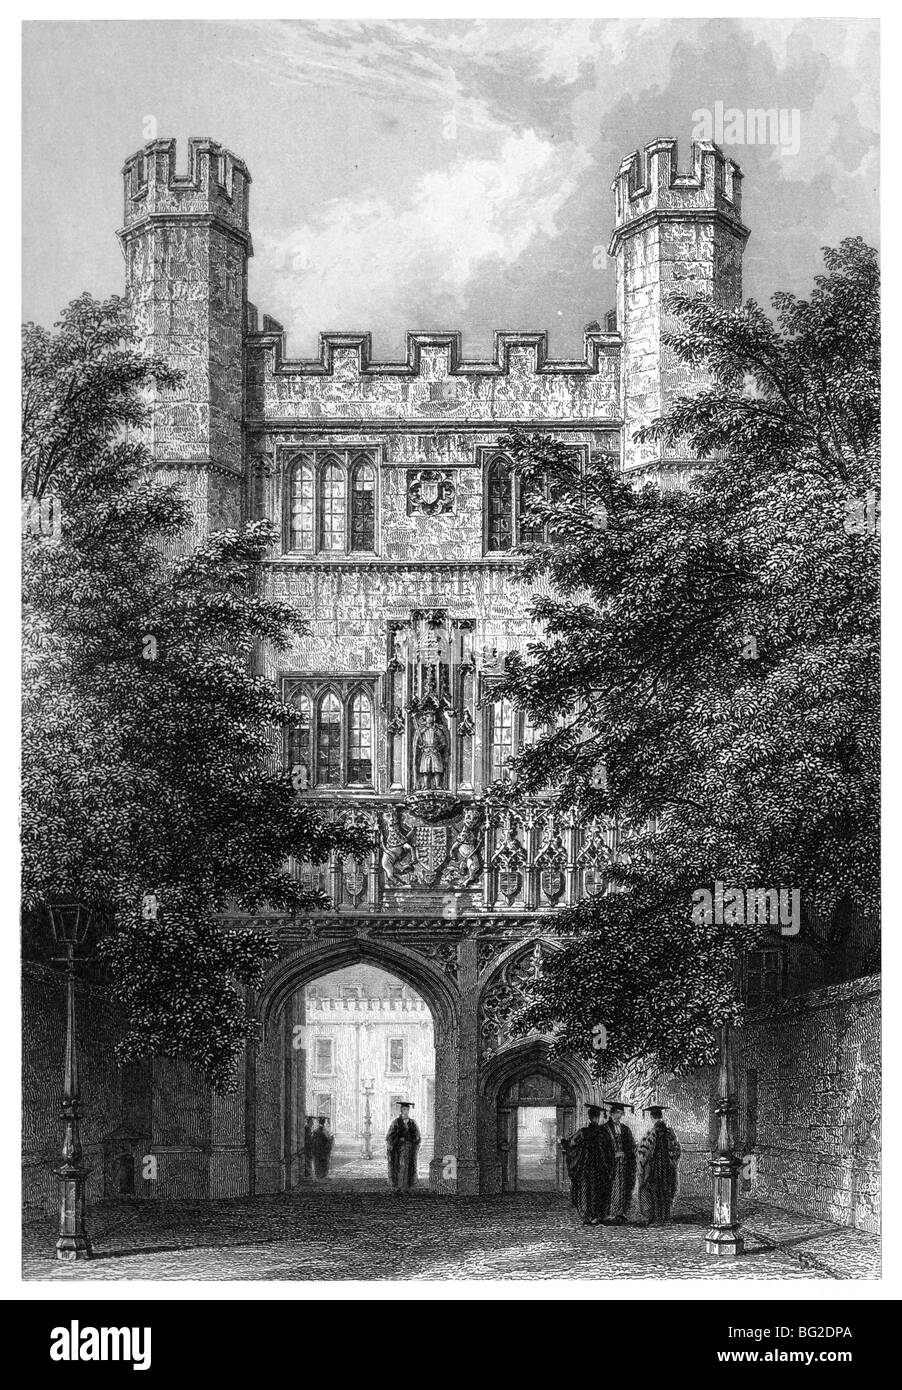 Trinity College, Cambridge - Entrance Gateway Stock Photo